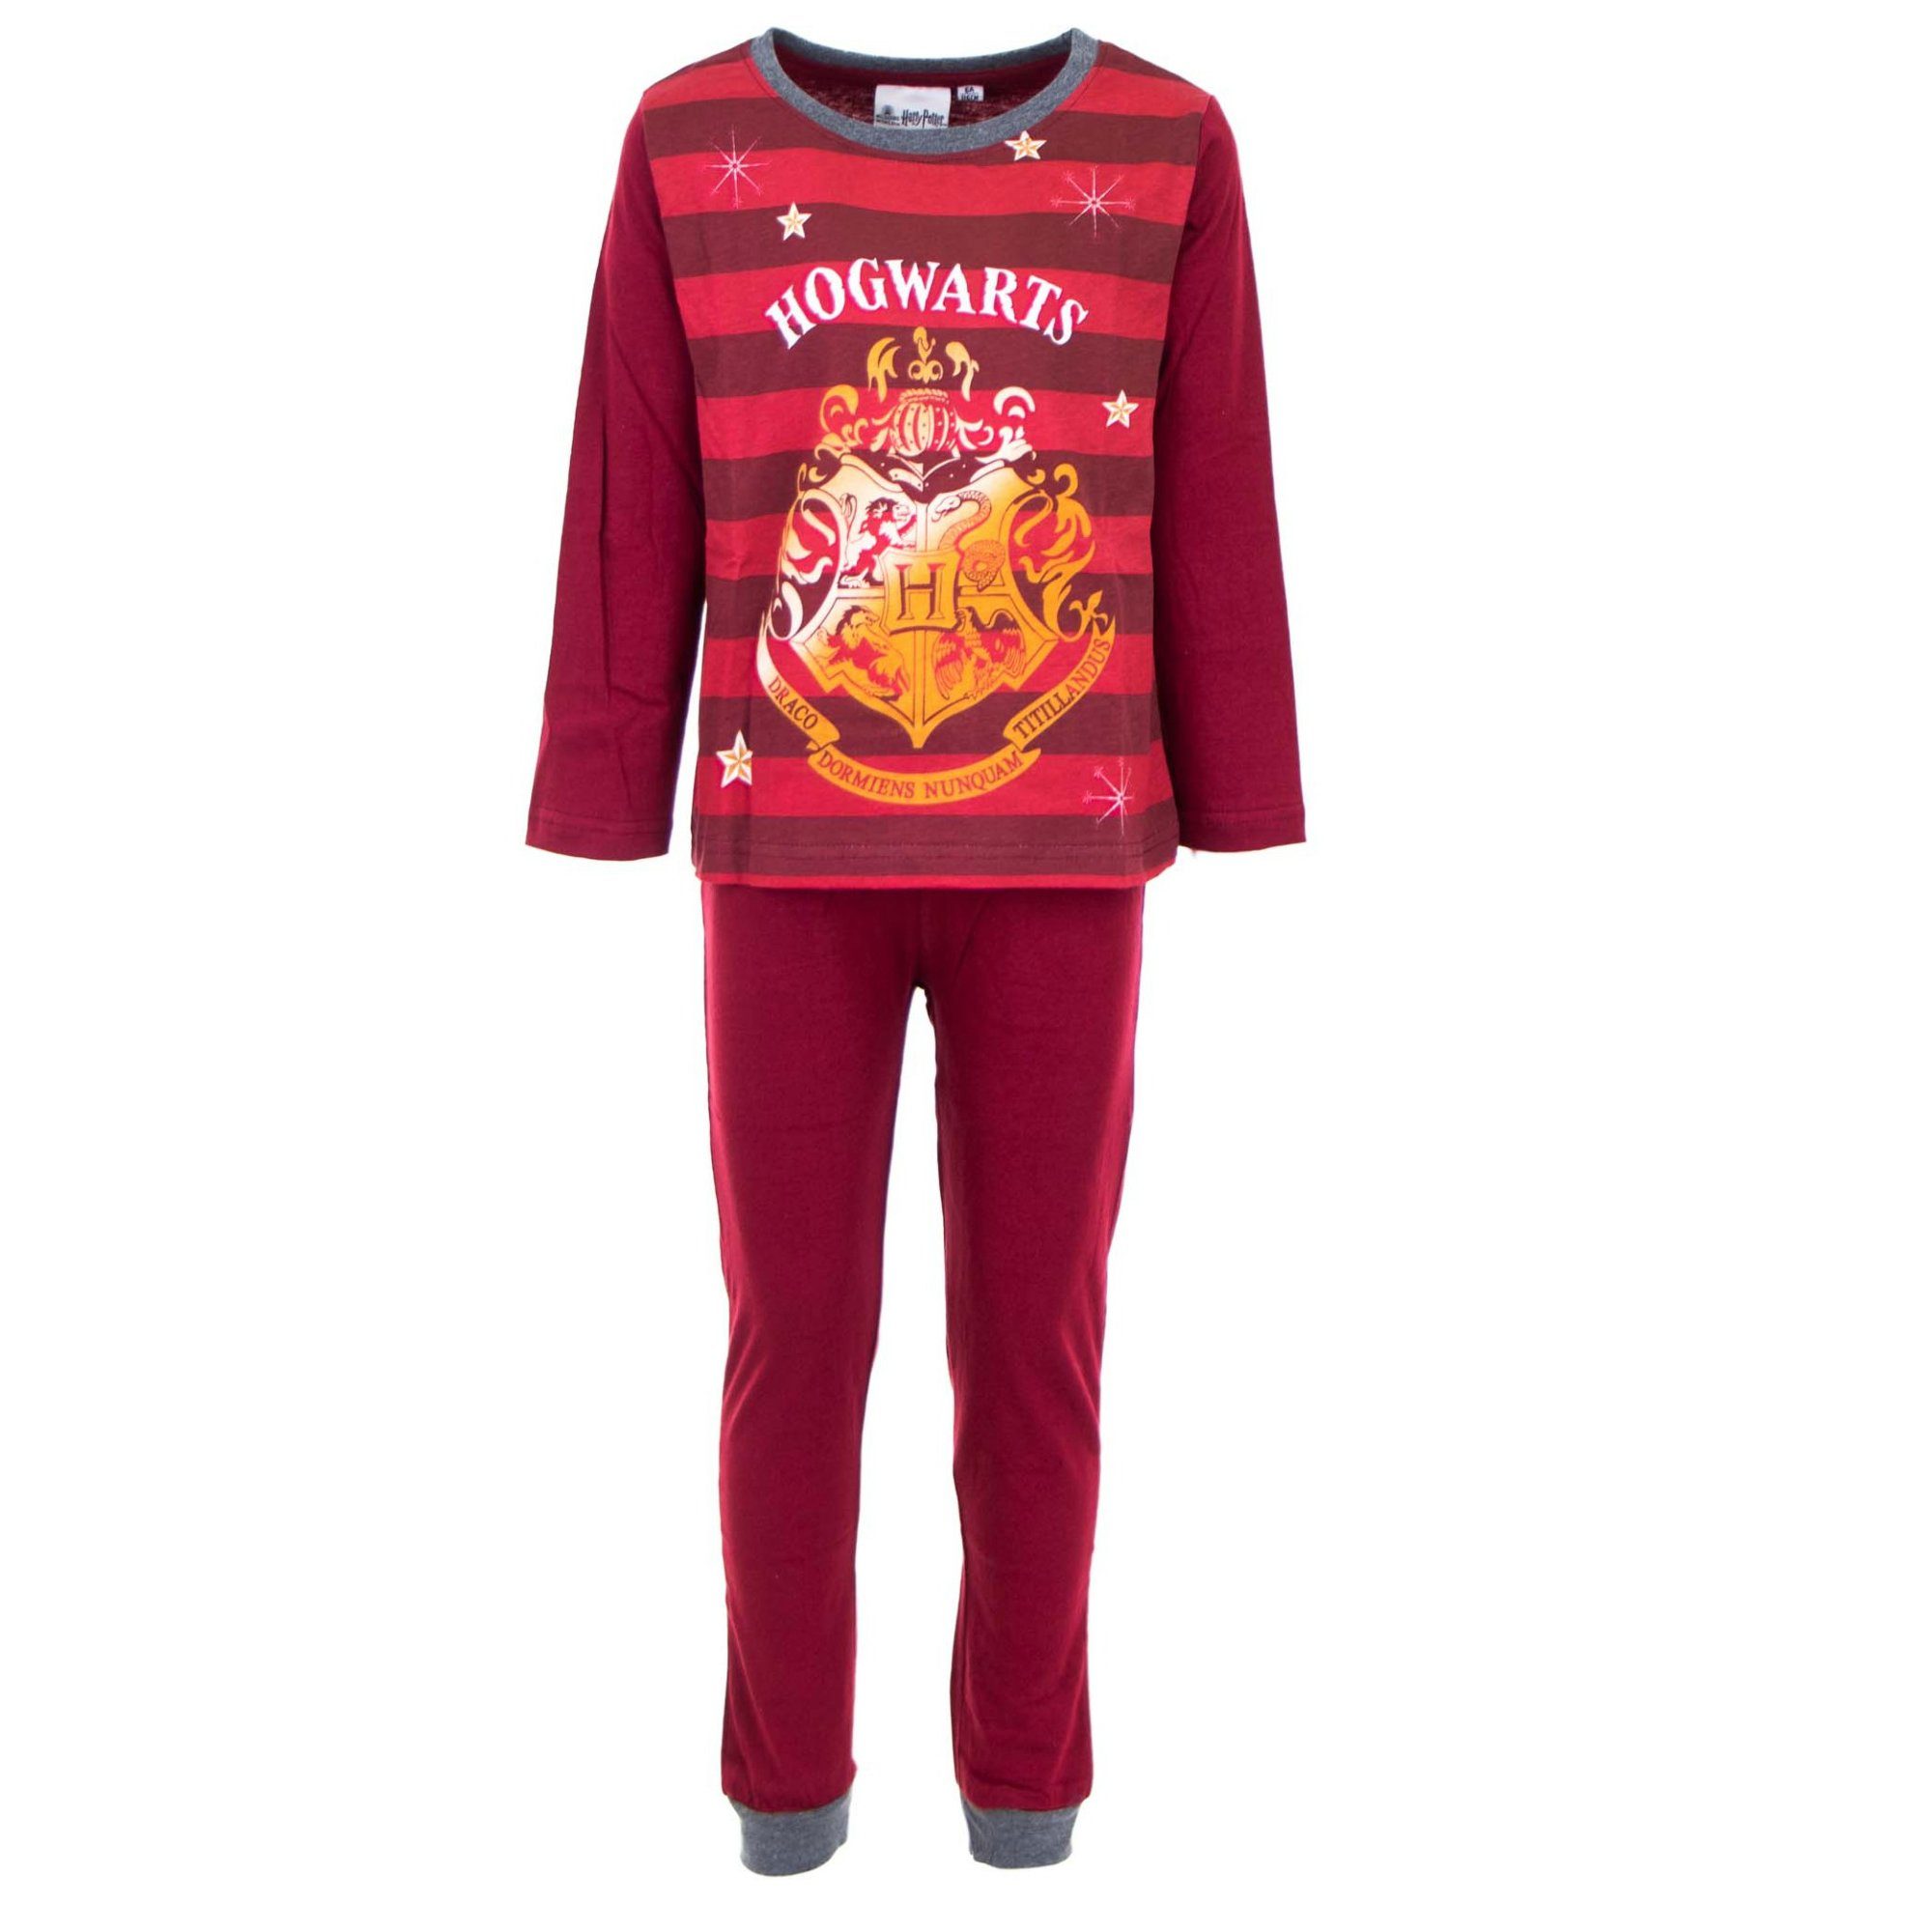 Harry Potter Schlafanzug Harry 98 100% Rot Gr. 128, Kinder Hogwarts Pyjama - Potter Baumwolle